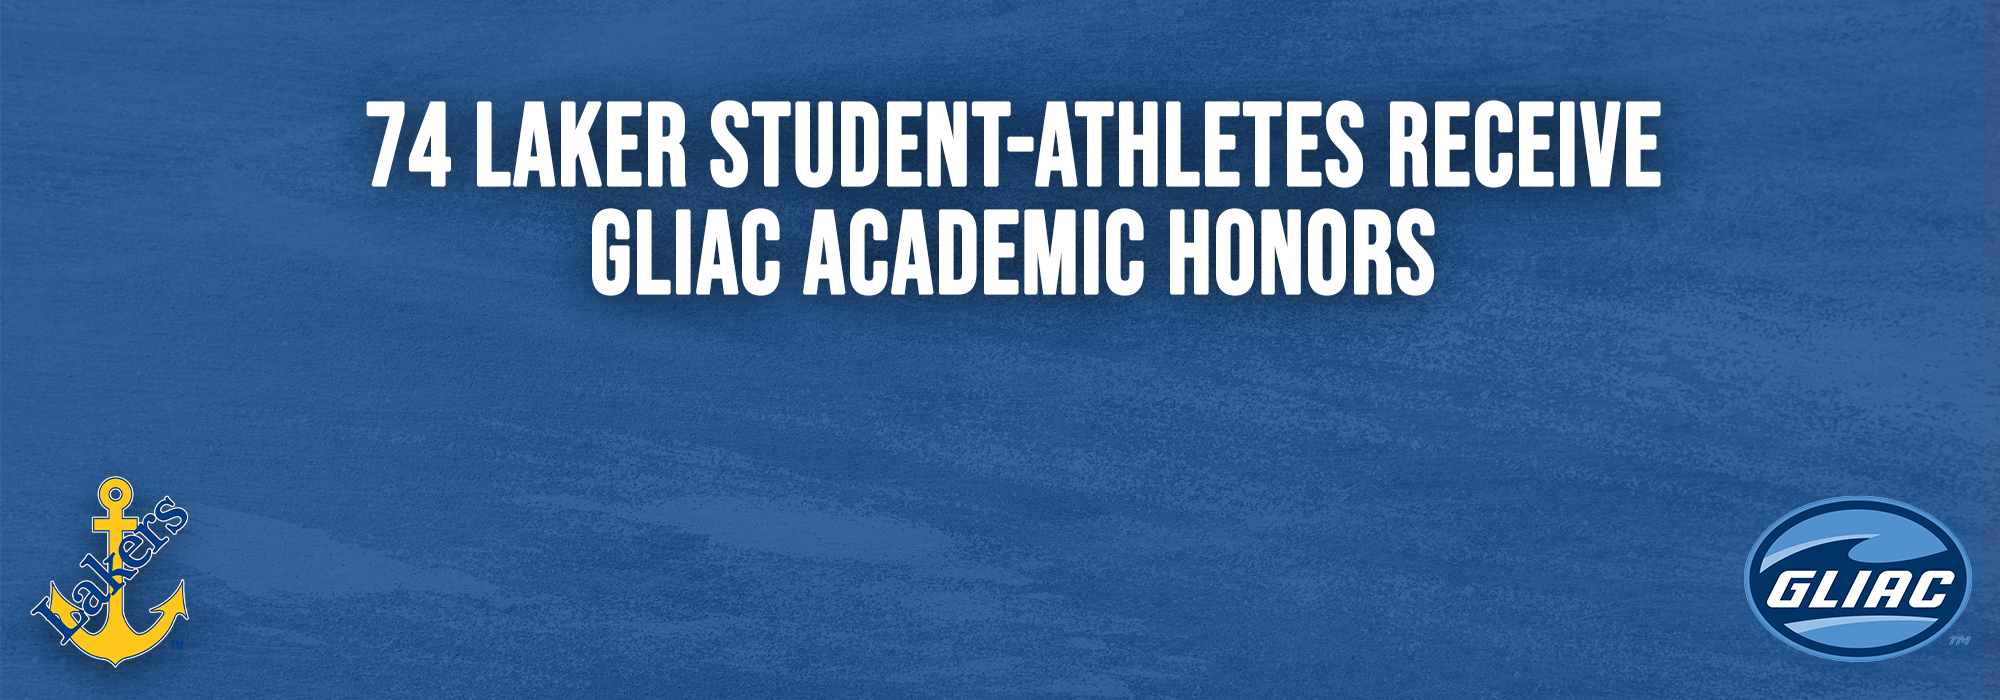 GLIAC Academic Honors poster